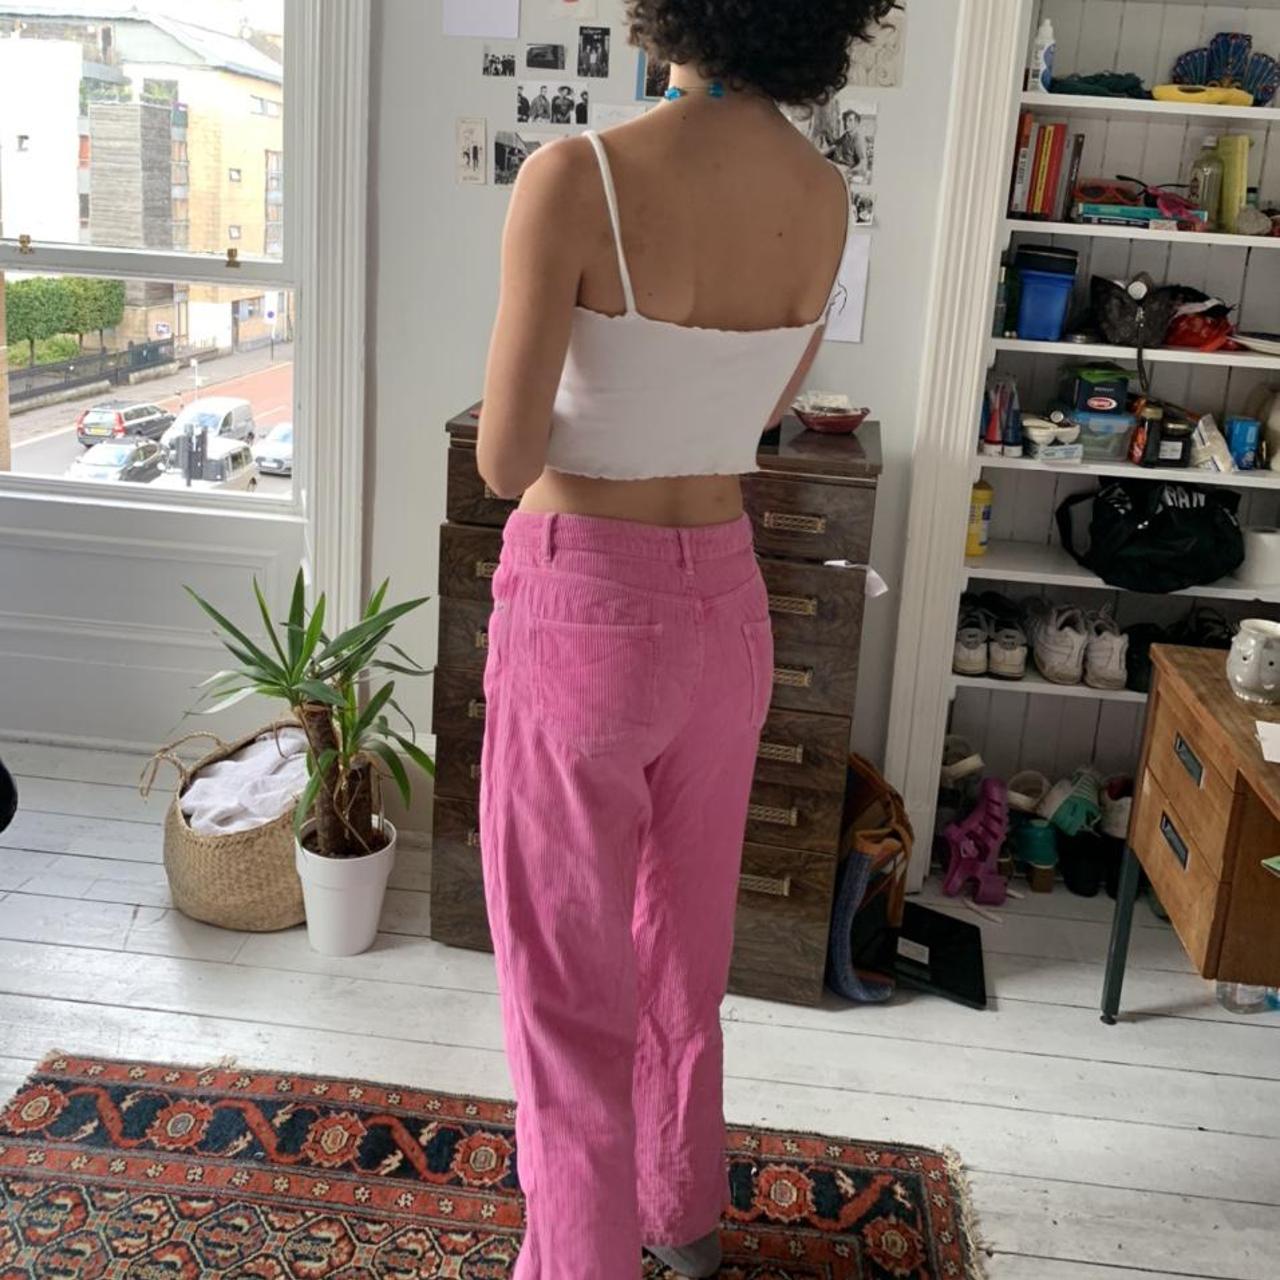 Neon pink slim fit trousers – Bluzat